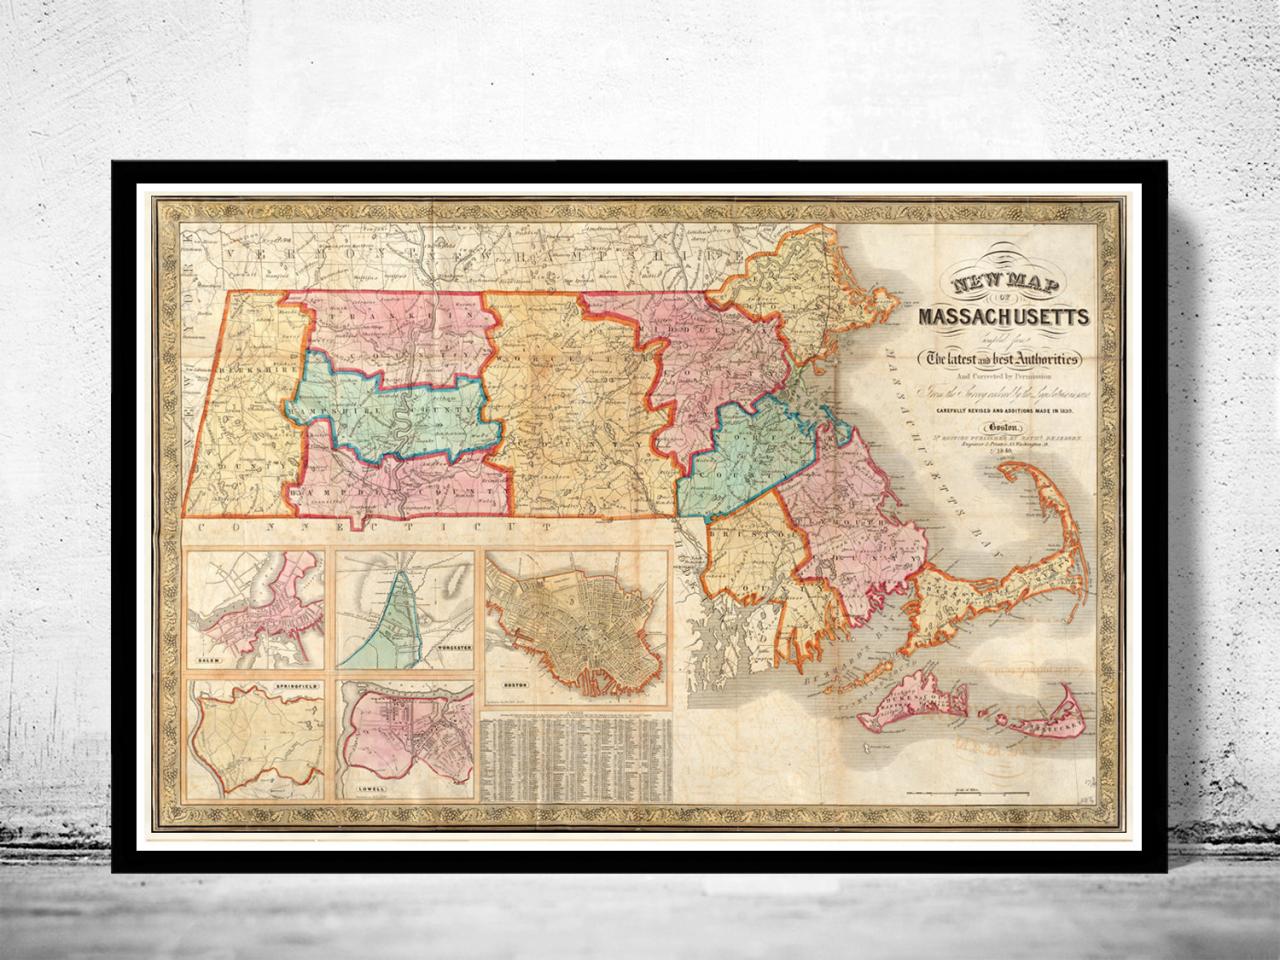 Old Map Of Massachusetts 1839, Boston, Salem, Worcester,lowell, Springfield